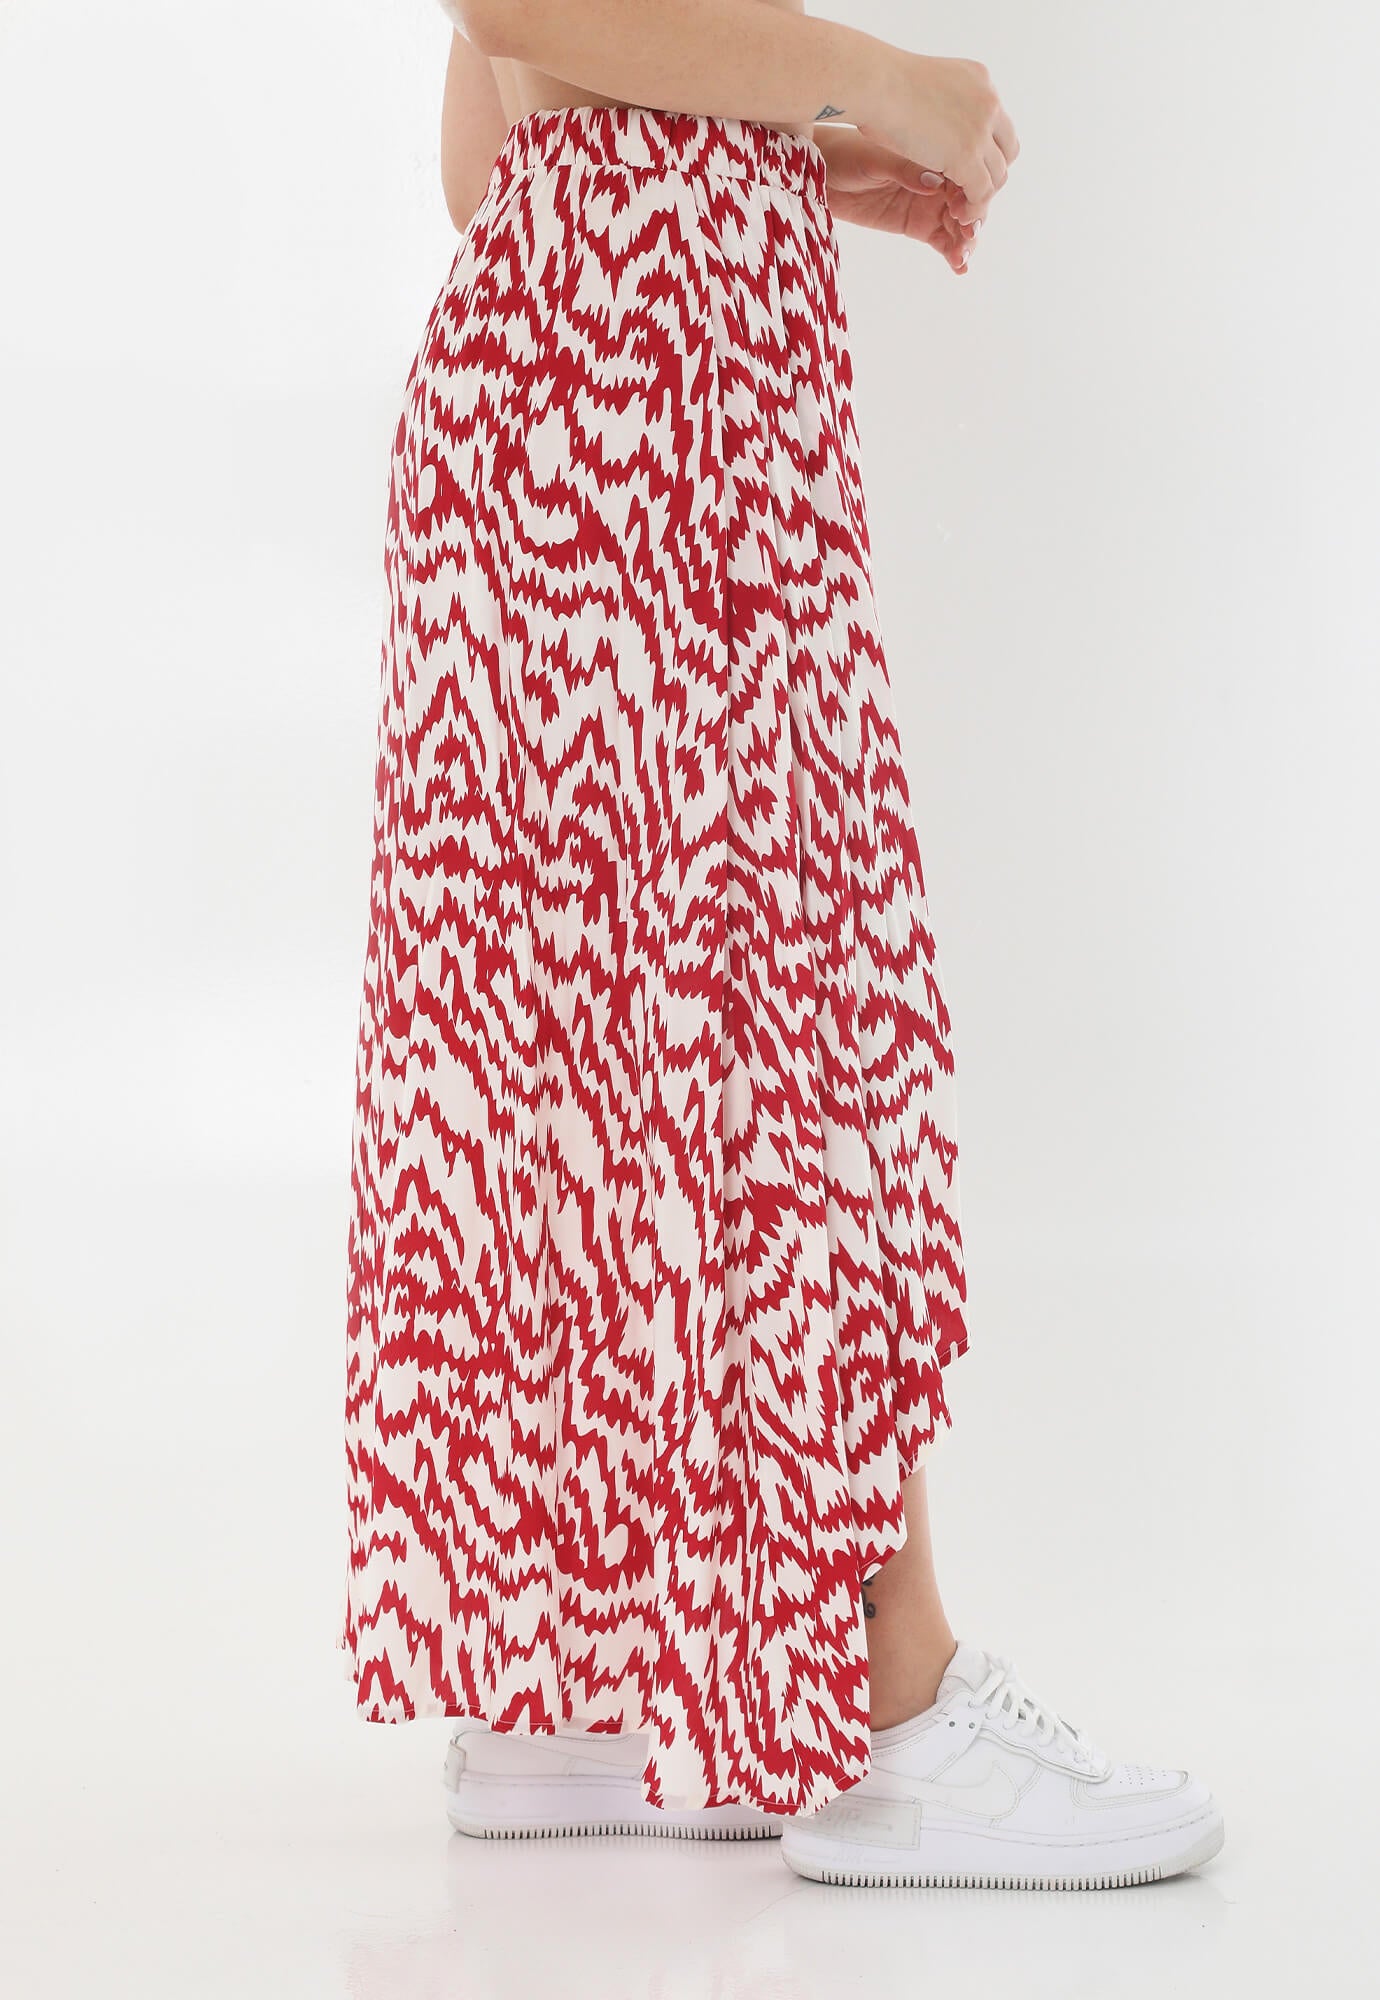 Falda larga roja estampada con tapa cruzada para mujer